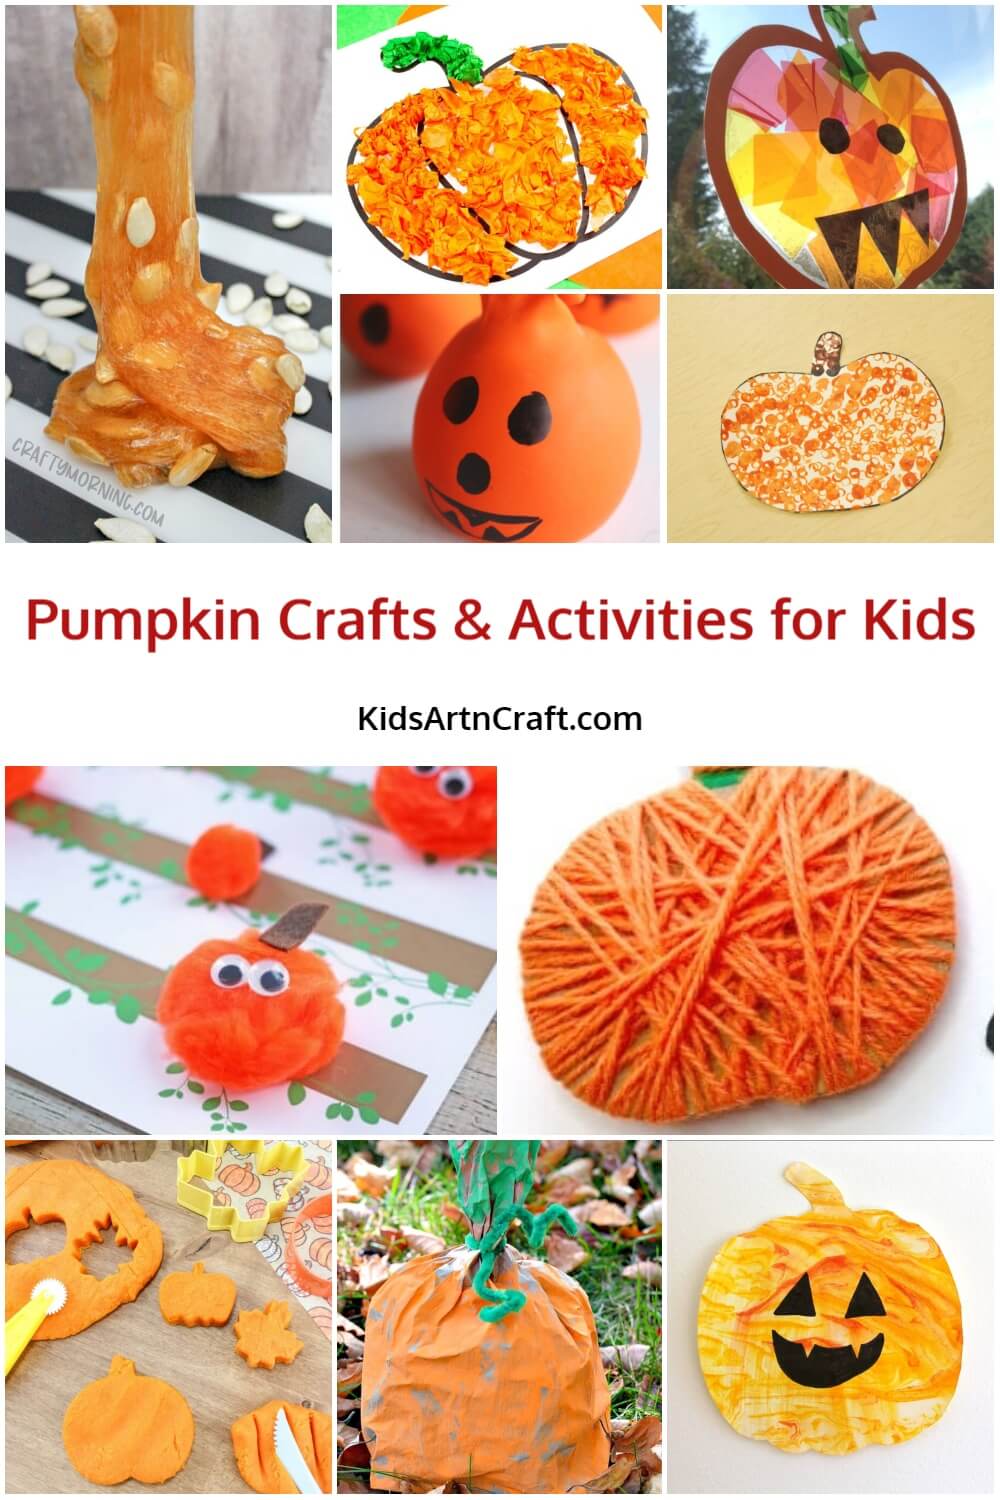 Pumpkin Crafts and Activities for Kids - Kids Art & Craft